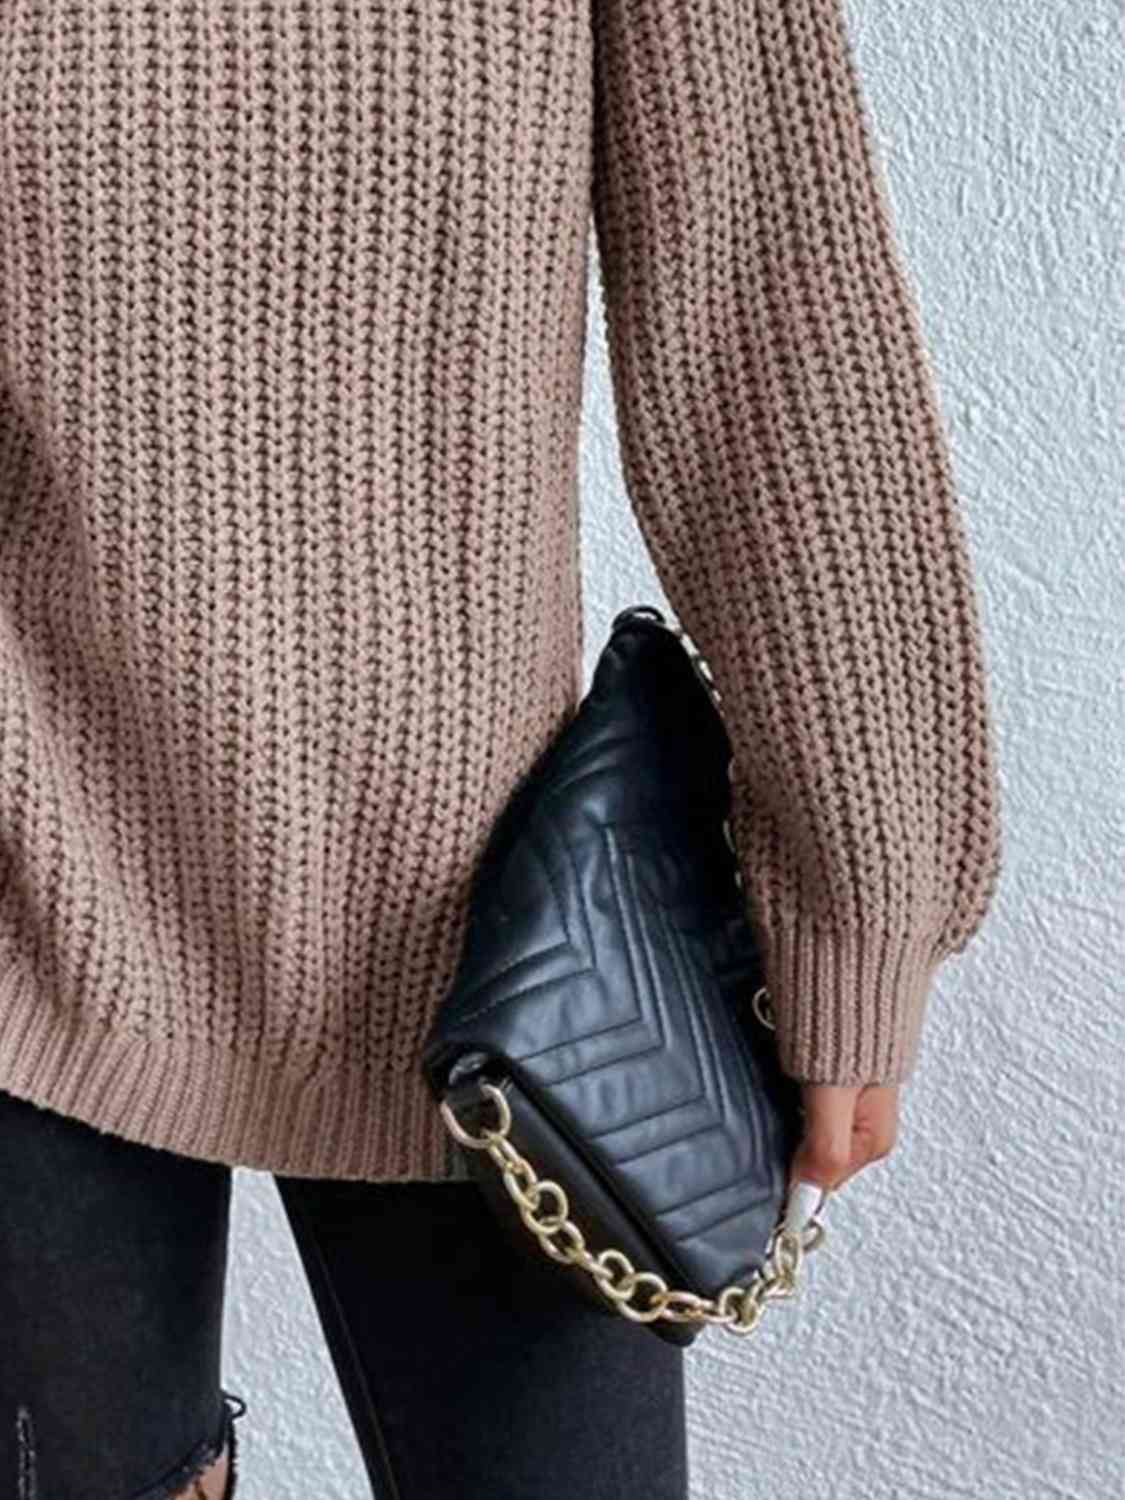 Turtleneck Rib-Knit Sweater | Khaki